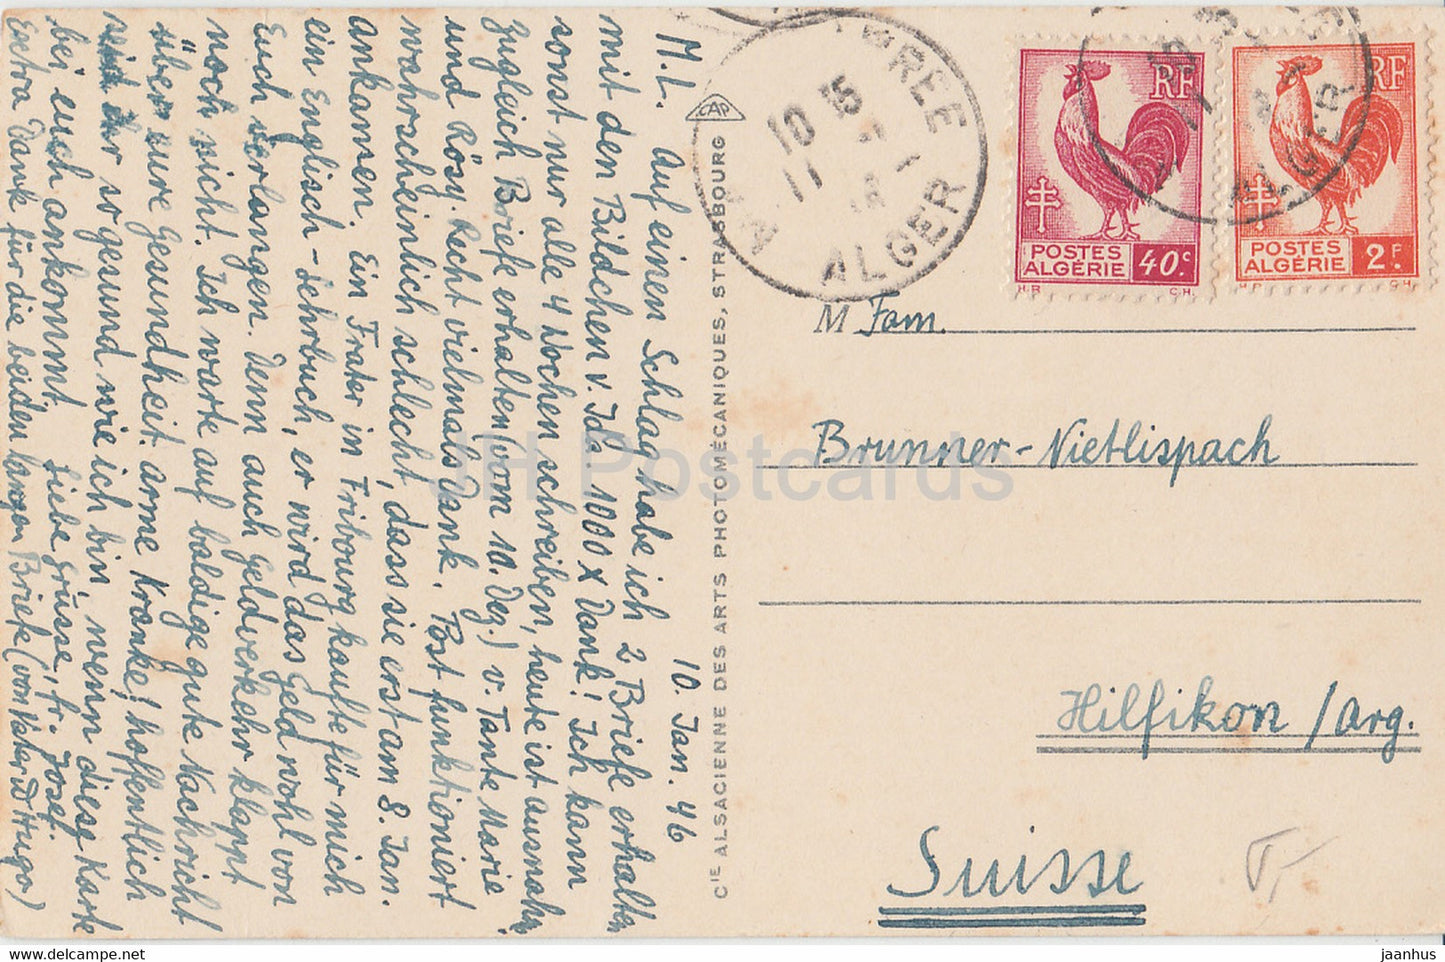 La Priere du Soir – 1262 – alte Postkarte – 1946 – Algerien – gebraucht